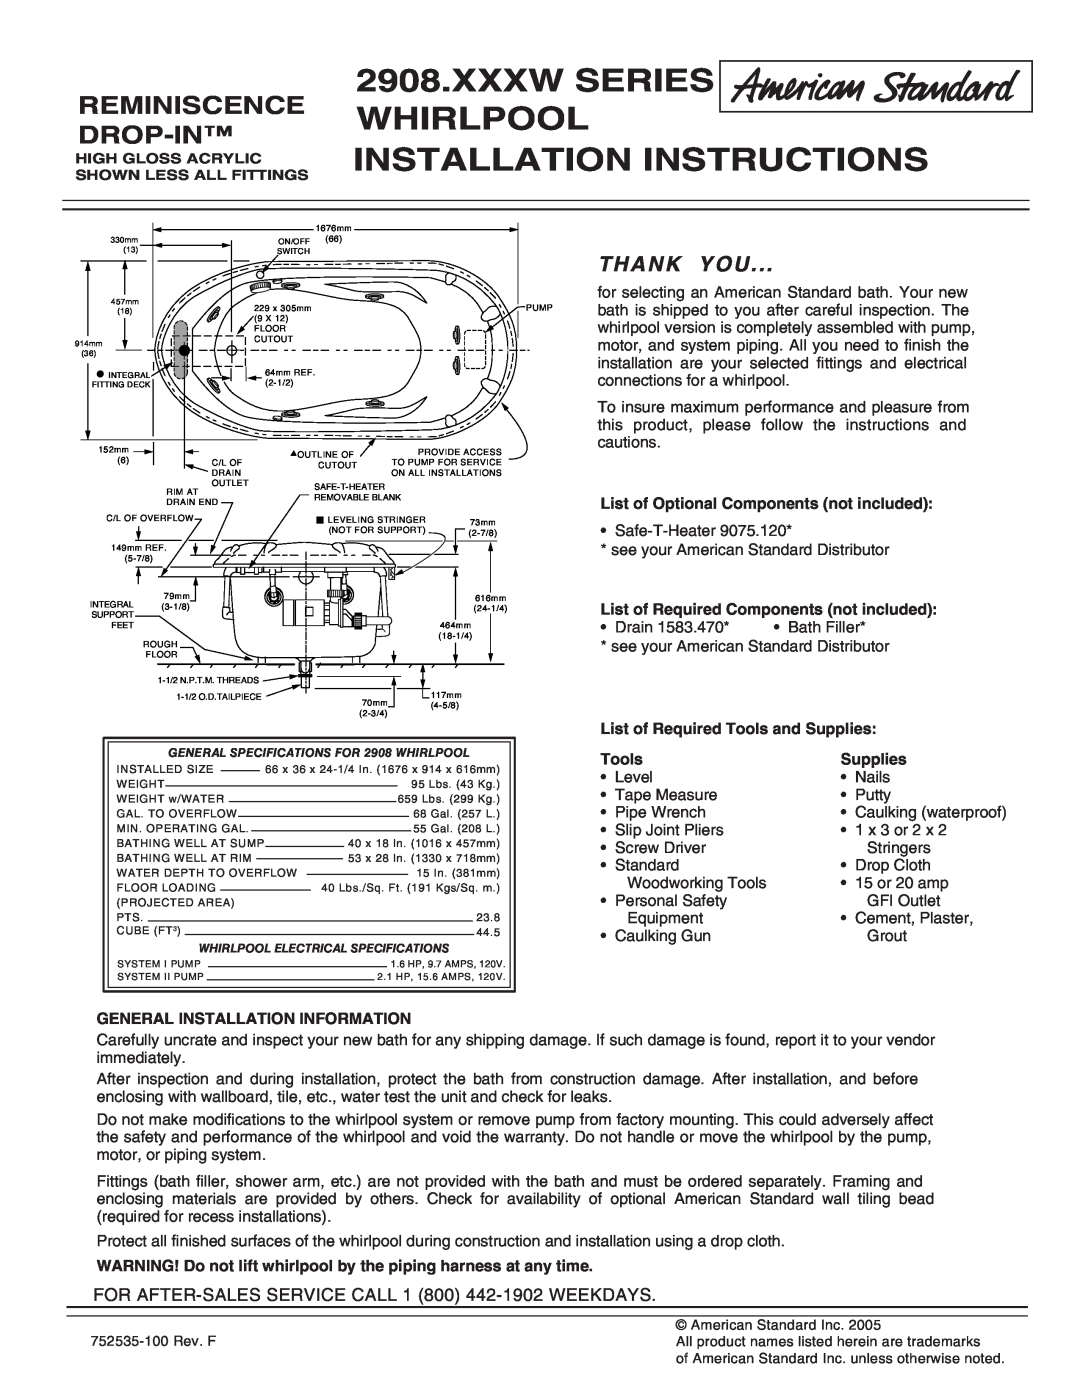 American Standard 2908.XXXW installation instructions Xxxw Series Whirlpool Installation Instructions, Thank You, Tools 